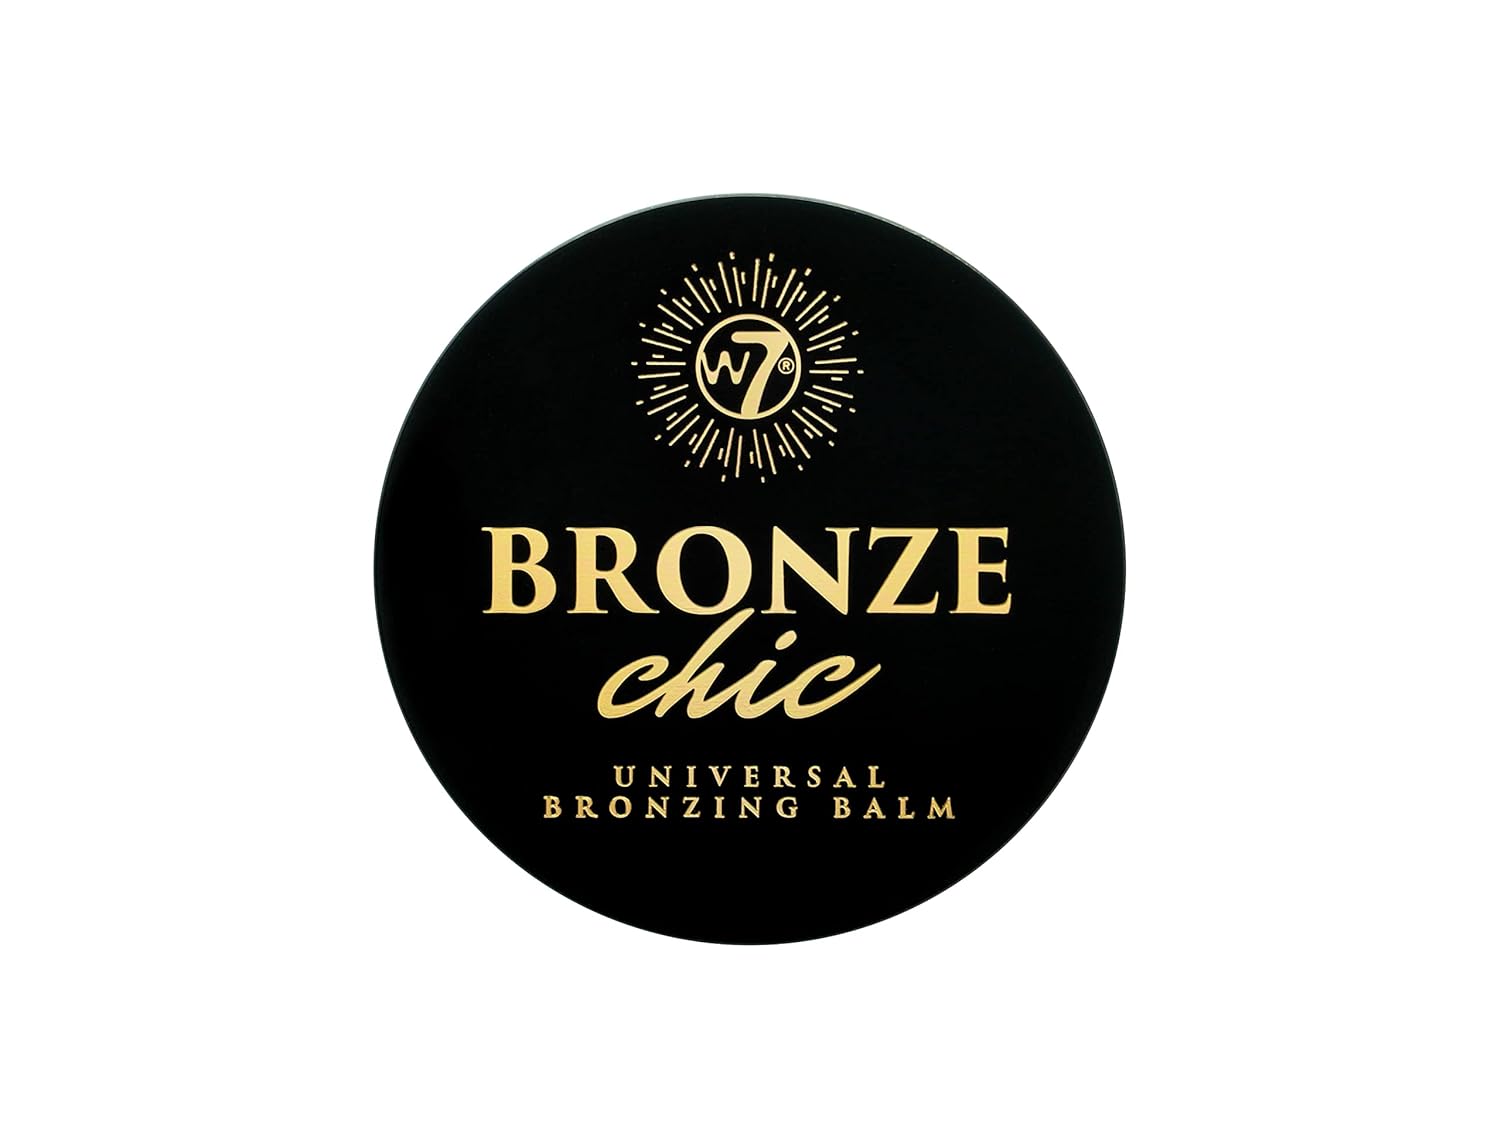 W7 Bronze Chic Bronzer - Cream Bronzing Balm - Contouring & Highlighting Vegan Makeup : Beauty & Personal Care